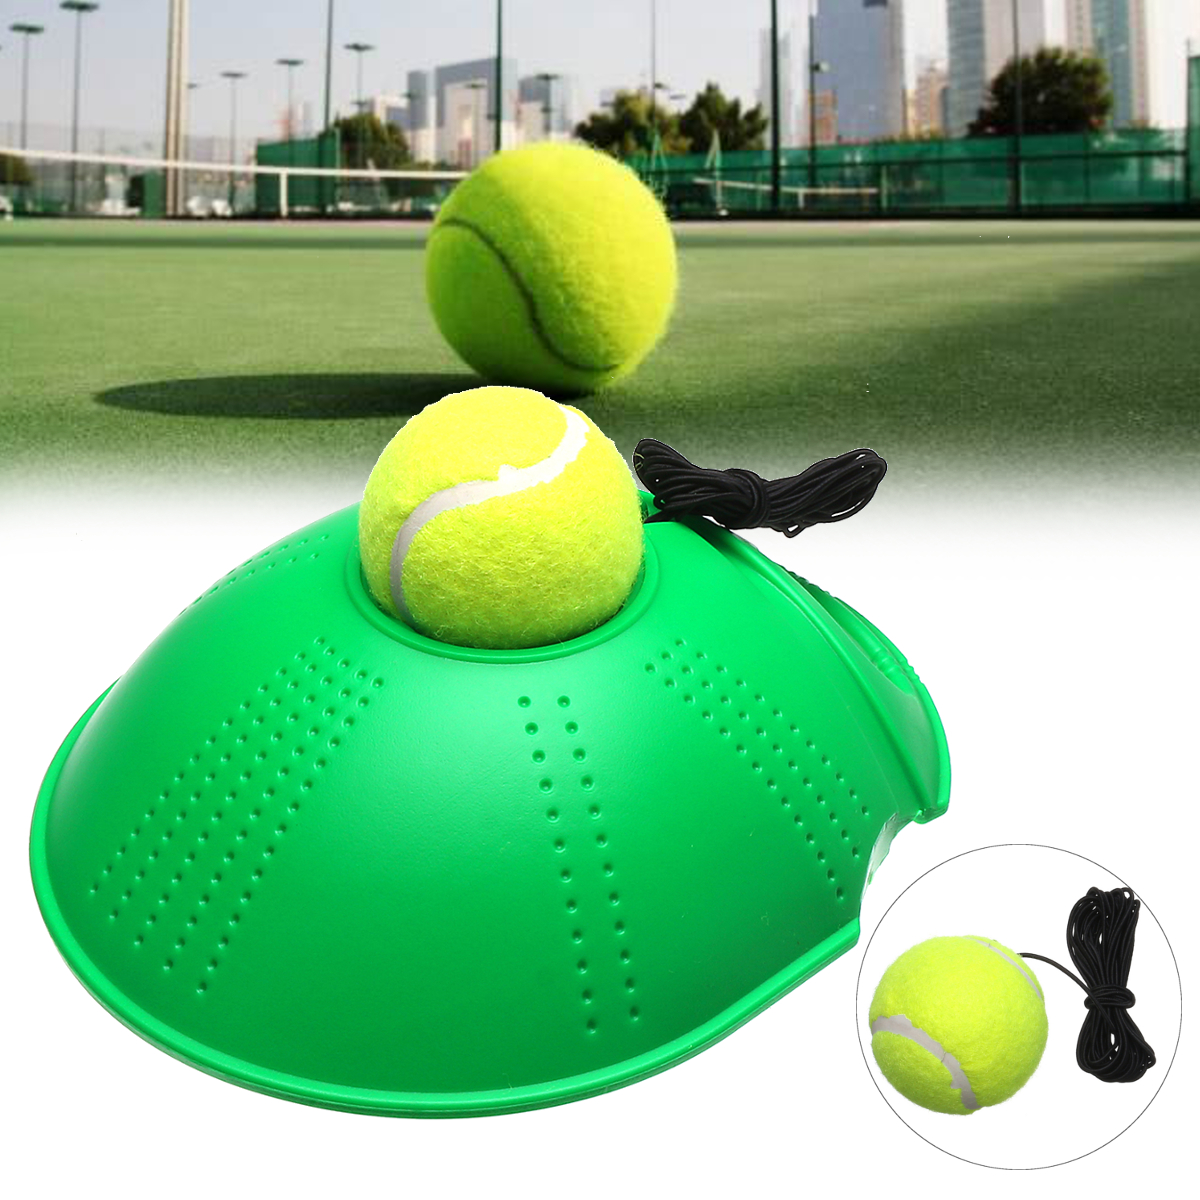 Tennis-Training-Tool-Rebound-Trainer-Self-study-Exercise-Ball-Baseboard-Holder-1305524-1